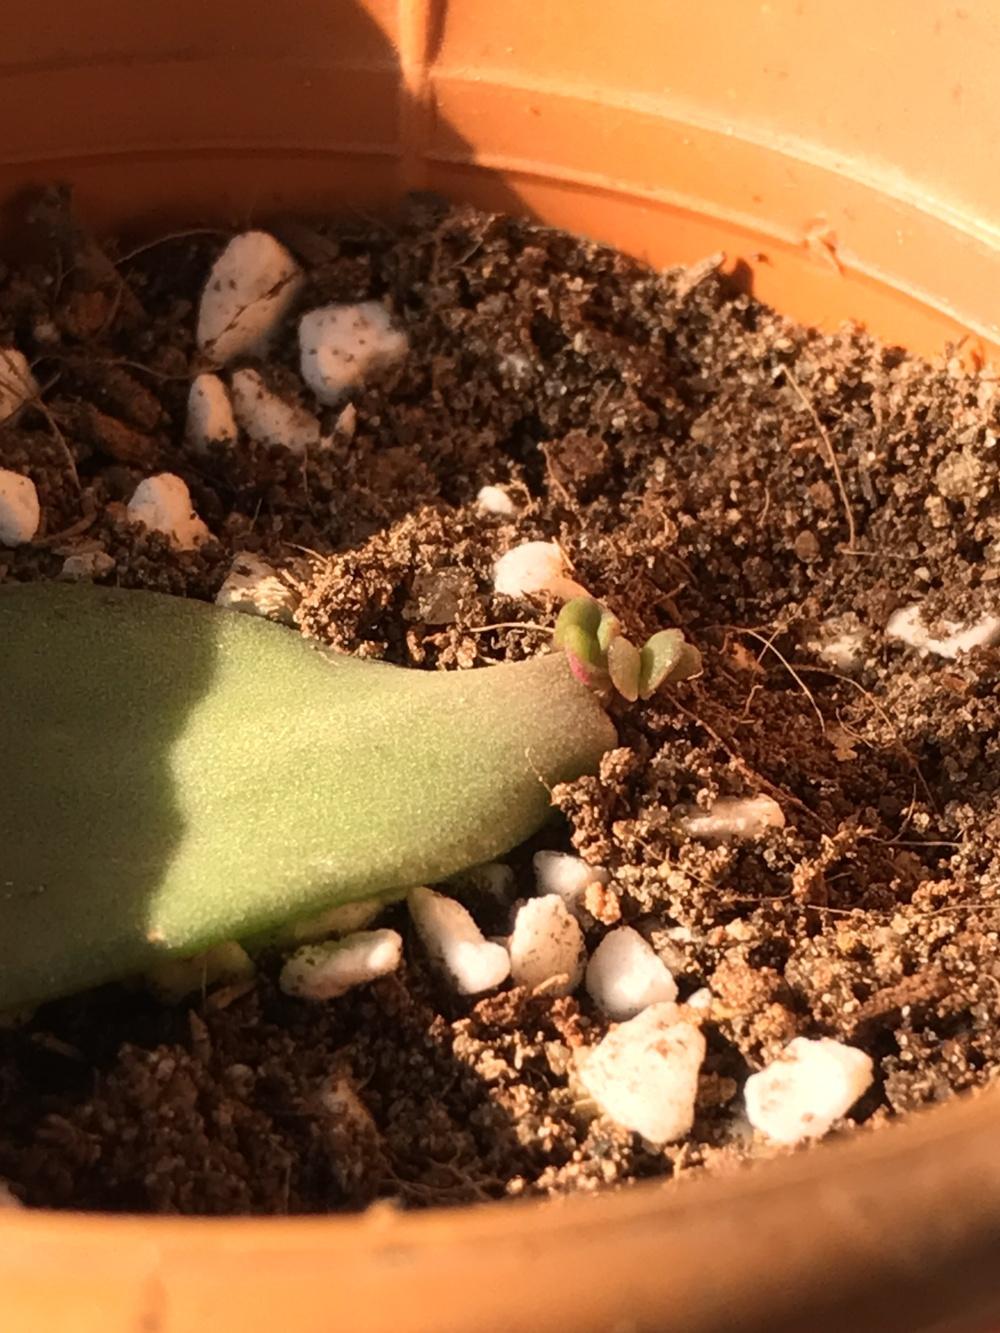 Photo of Jade Plant (Crassula ovata) uploaded by queen1694